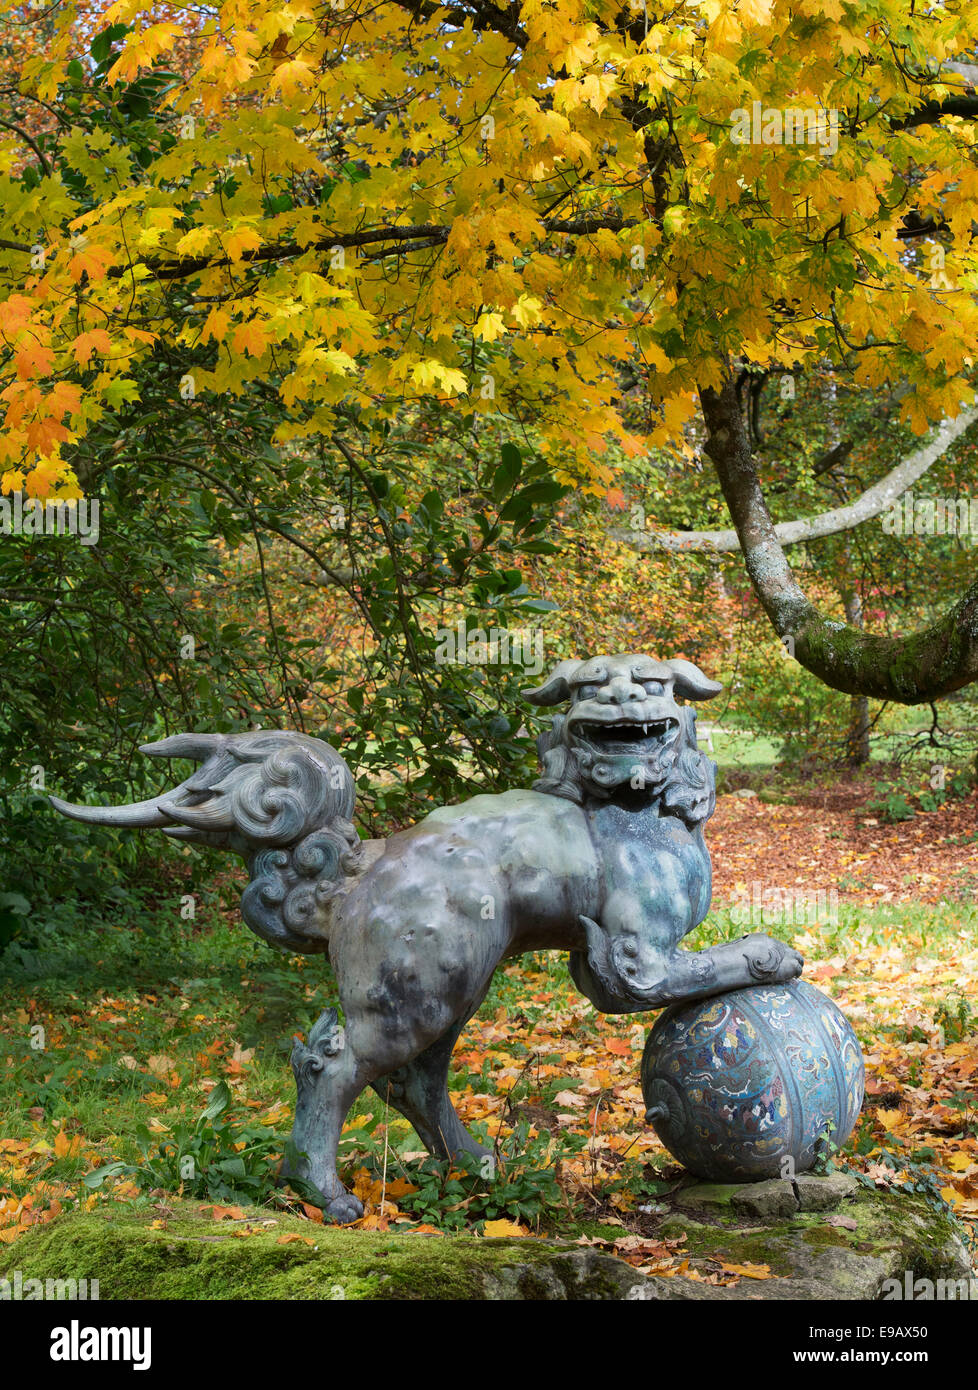 Cinese cane pippo statua in bronzo a Batsford Arboretum in autunno. Moreton-in-Marsh, Gloucestershire, Inghilterra Foto Stock